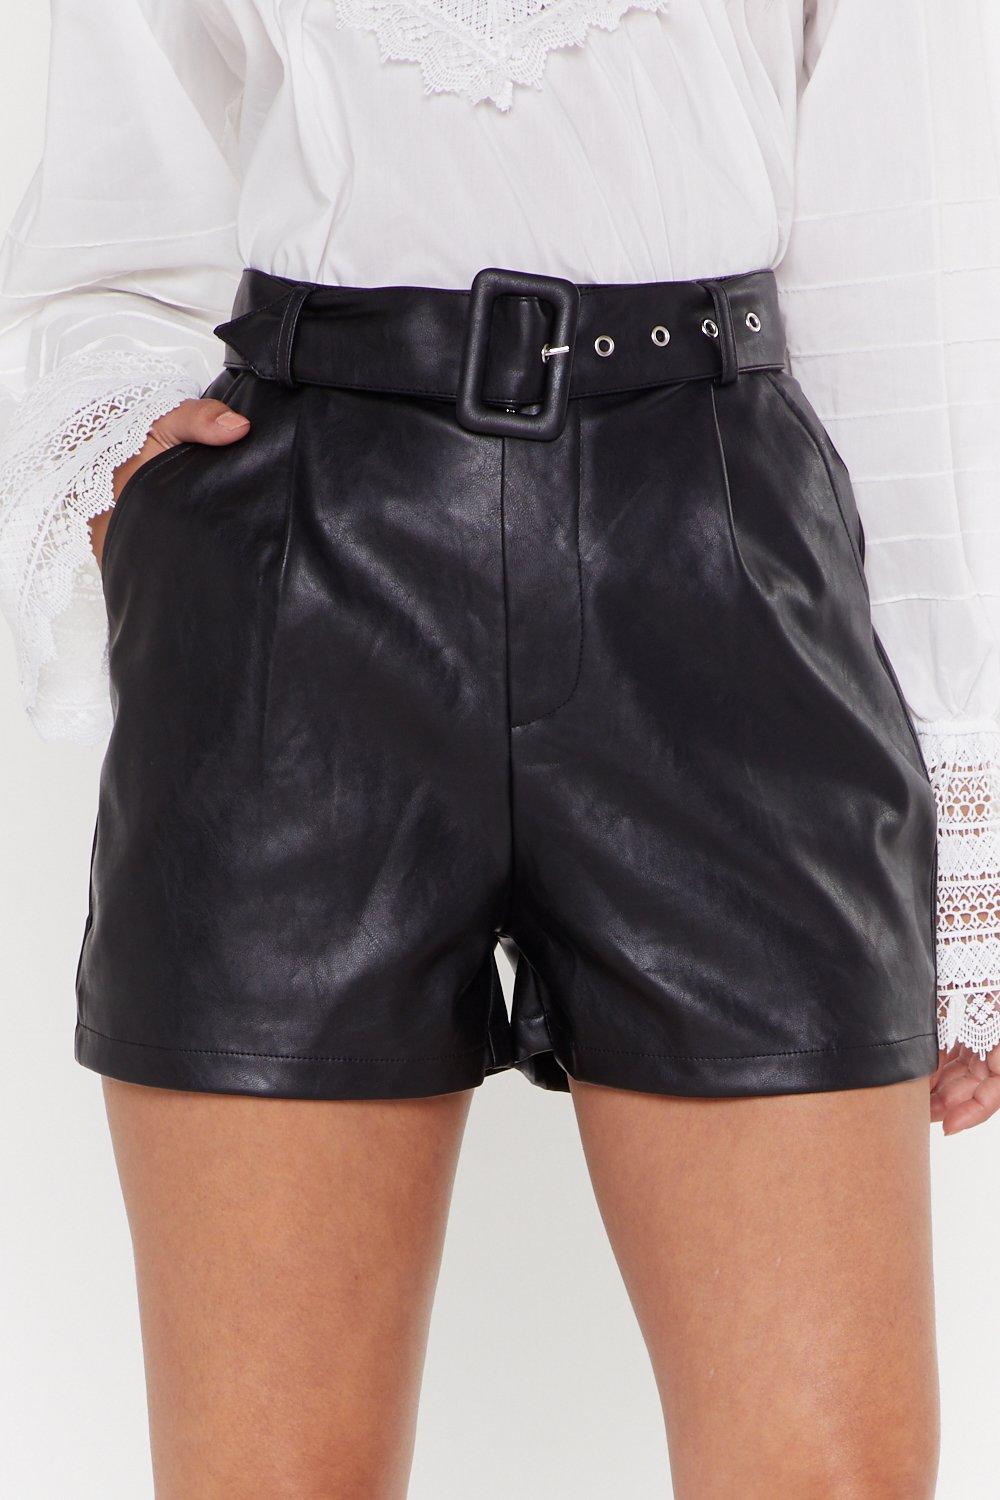 High Waisted Black Leather Shorts